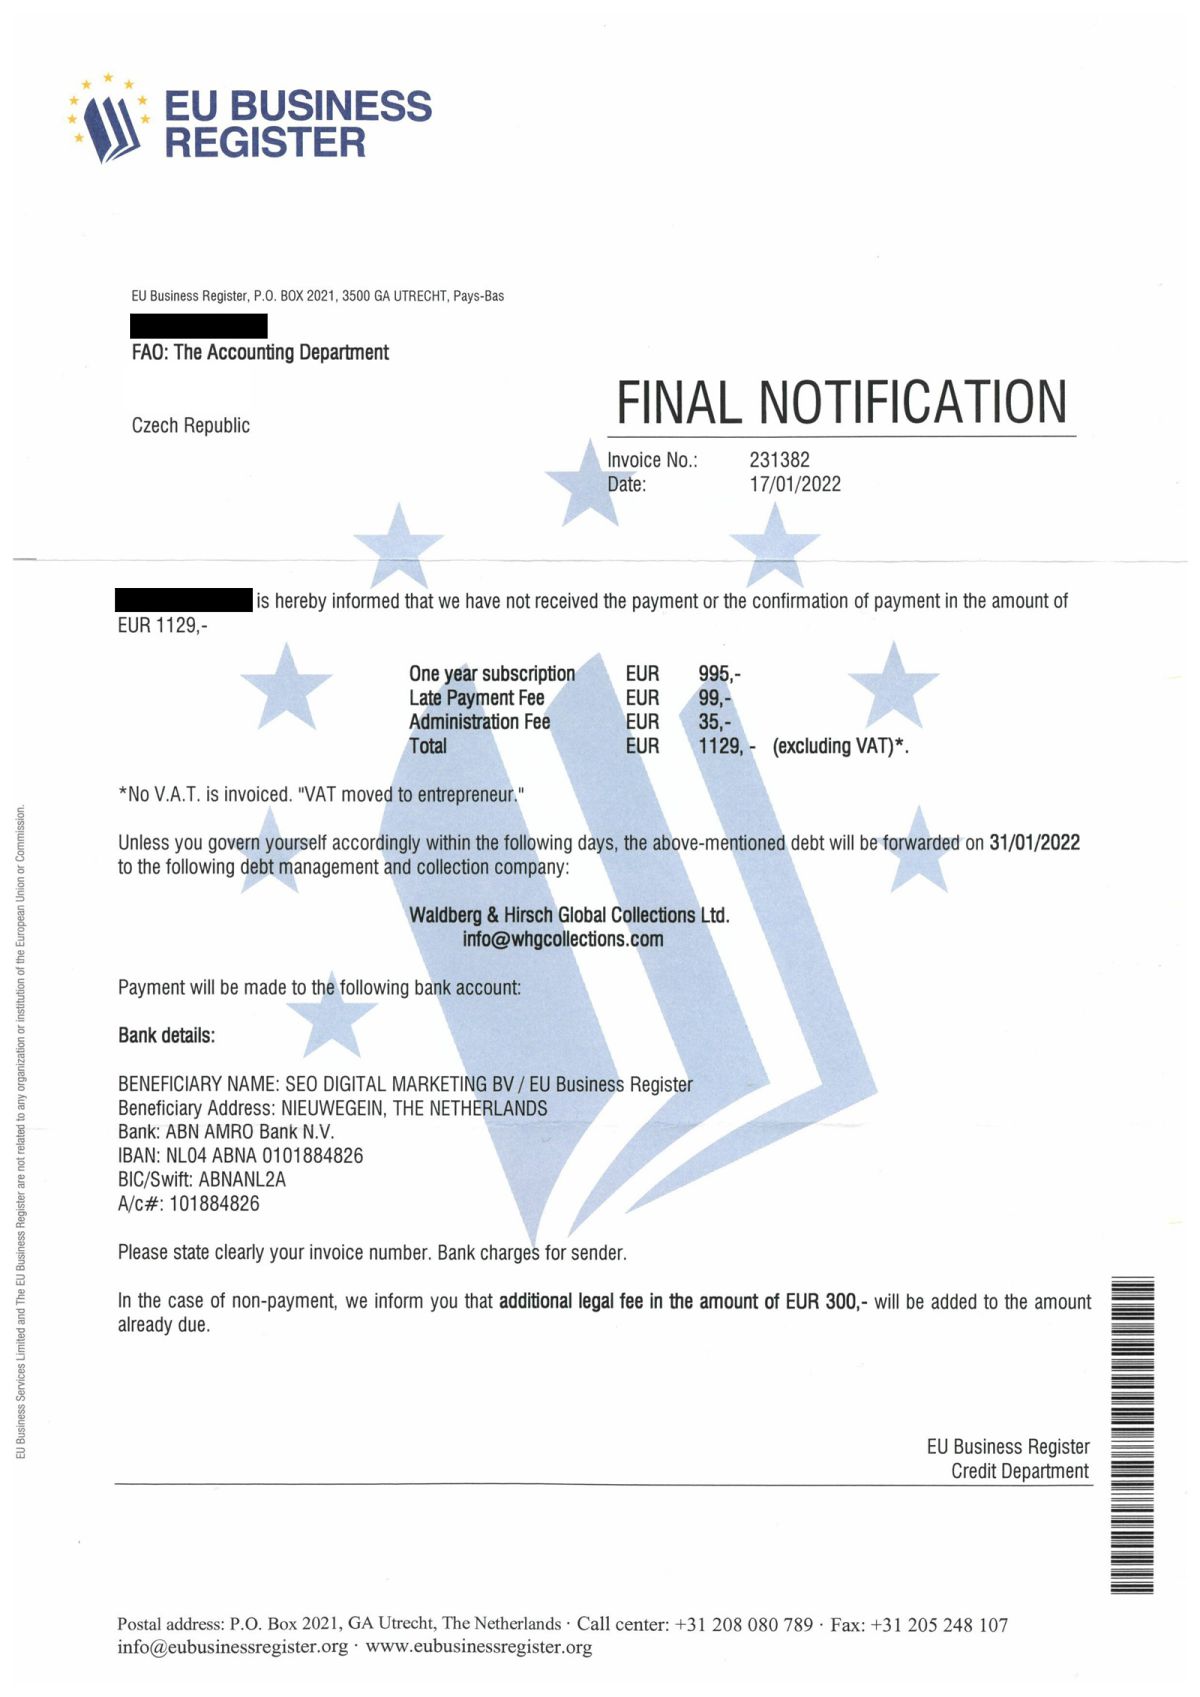 Spam “EU Business Register”: Qué sucede si no pagas